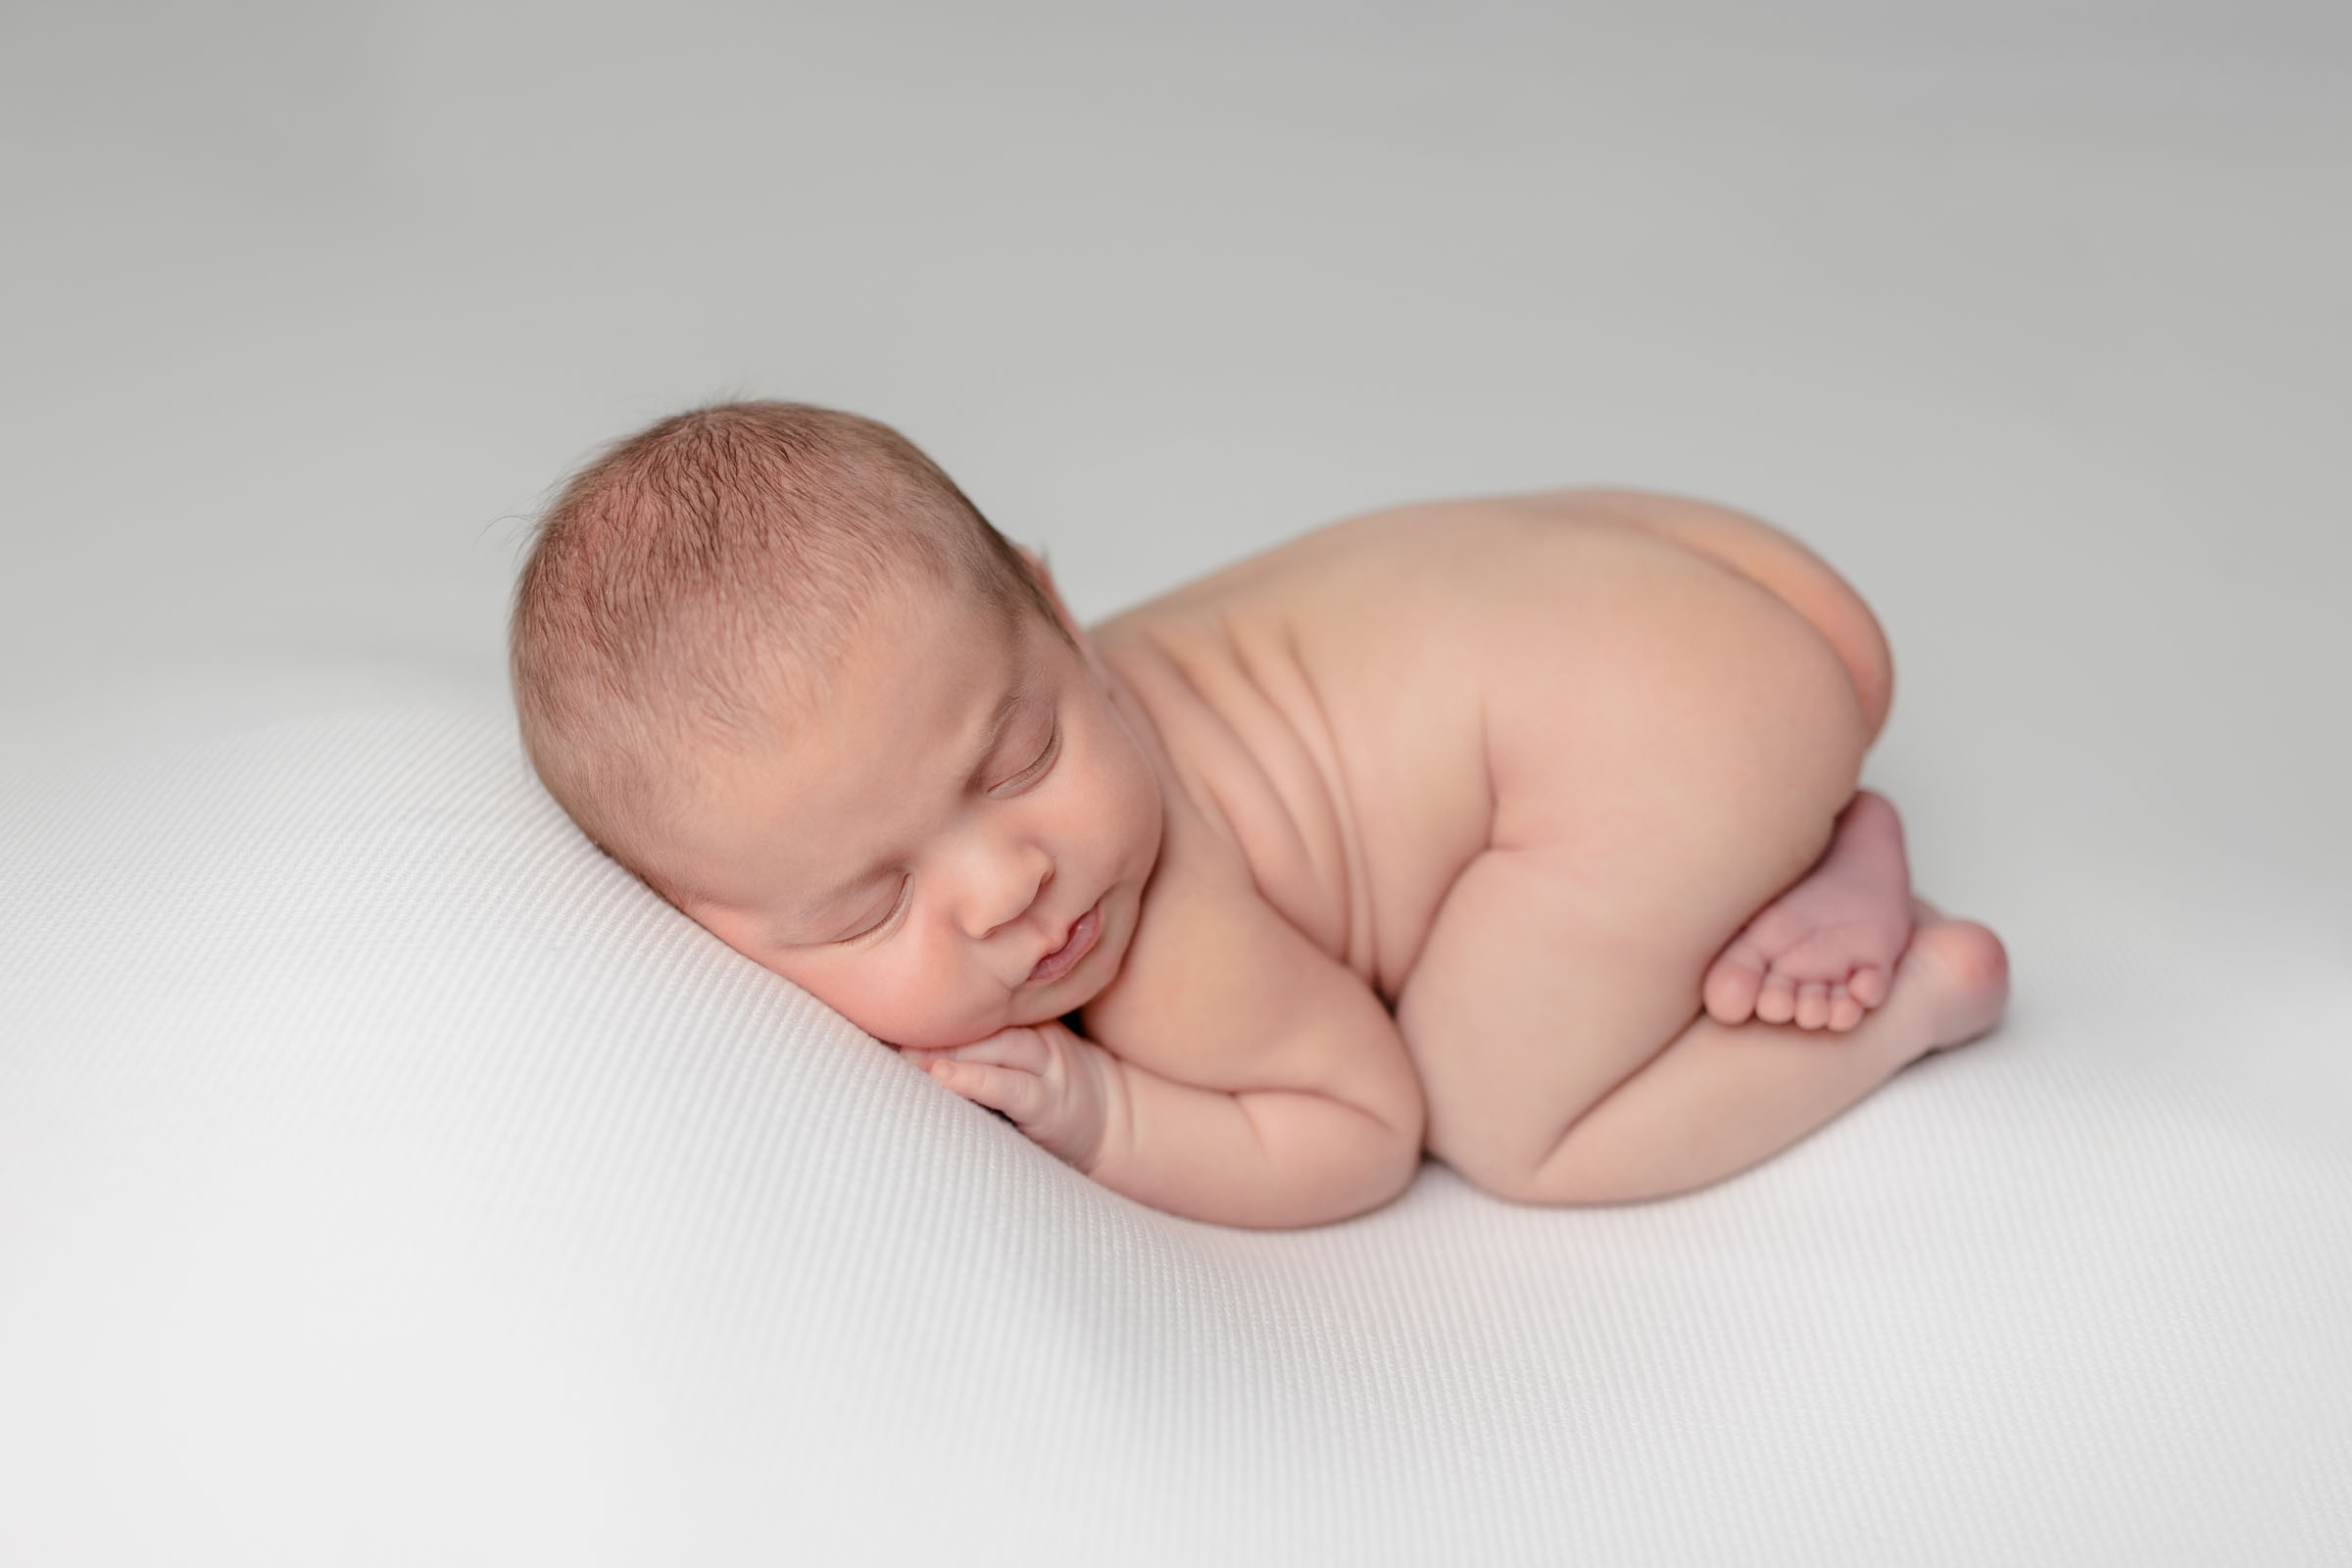 Bum up pose of newborn baby boy on white backdrop